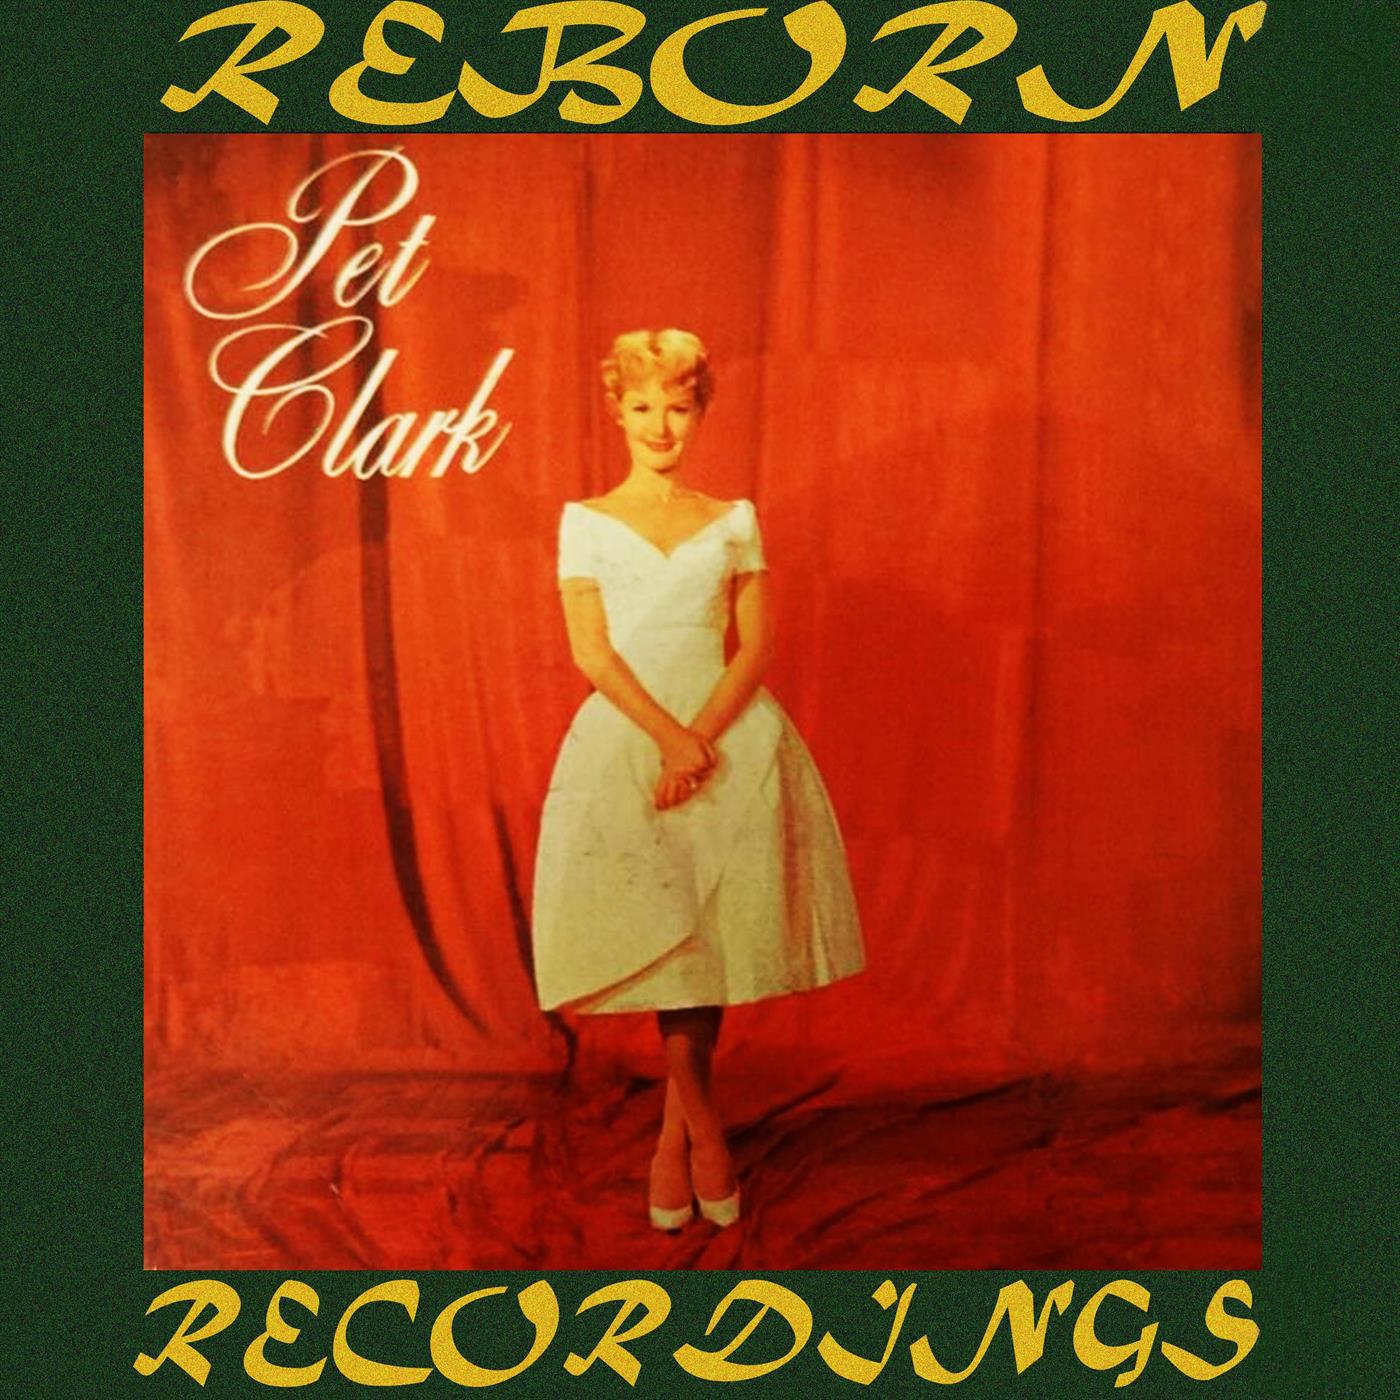 Pet Clark (HD Remastered)